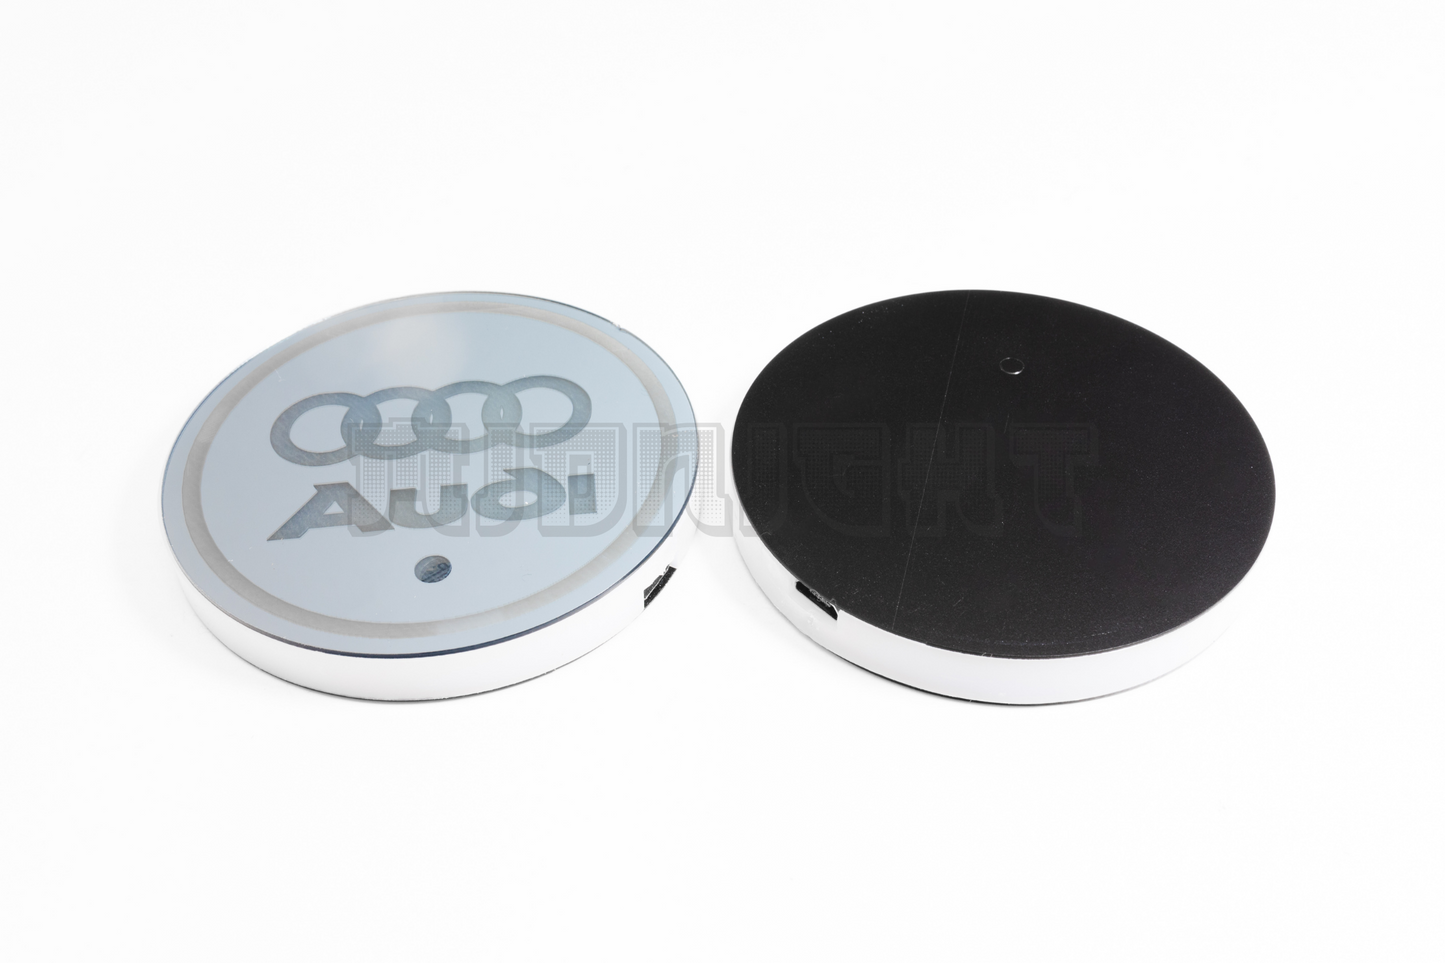 Audi LED Cup Holder Coaster